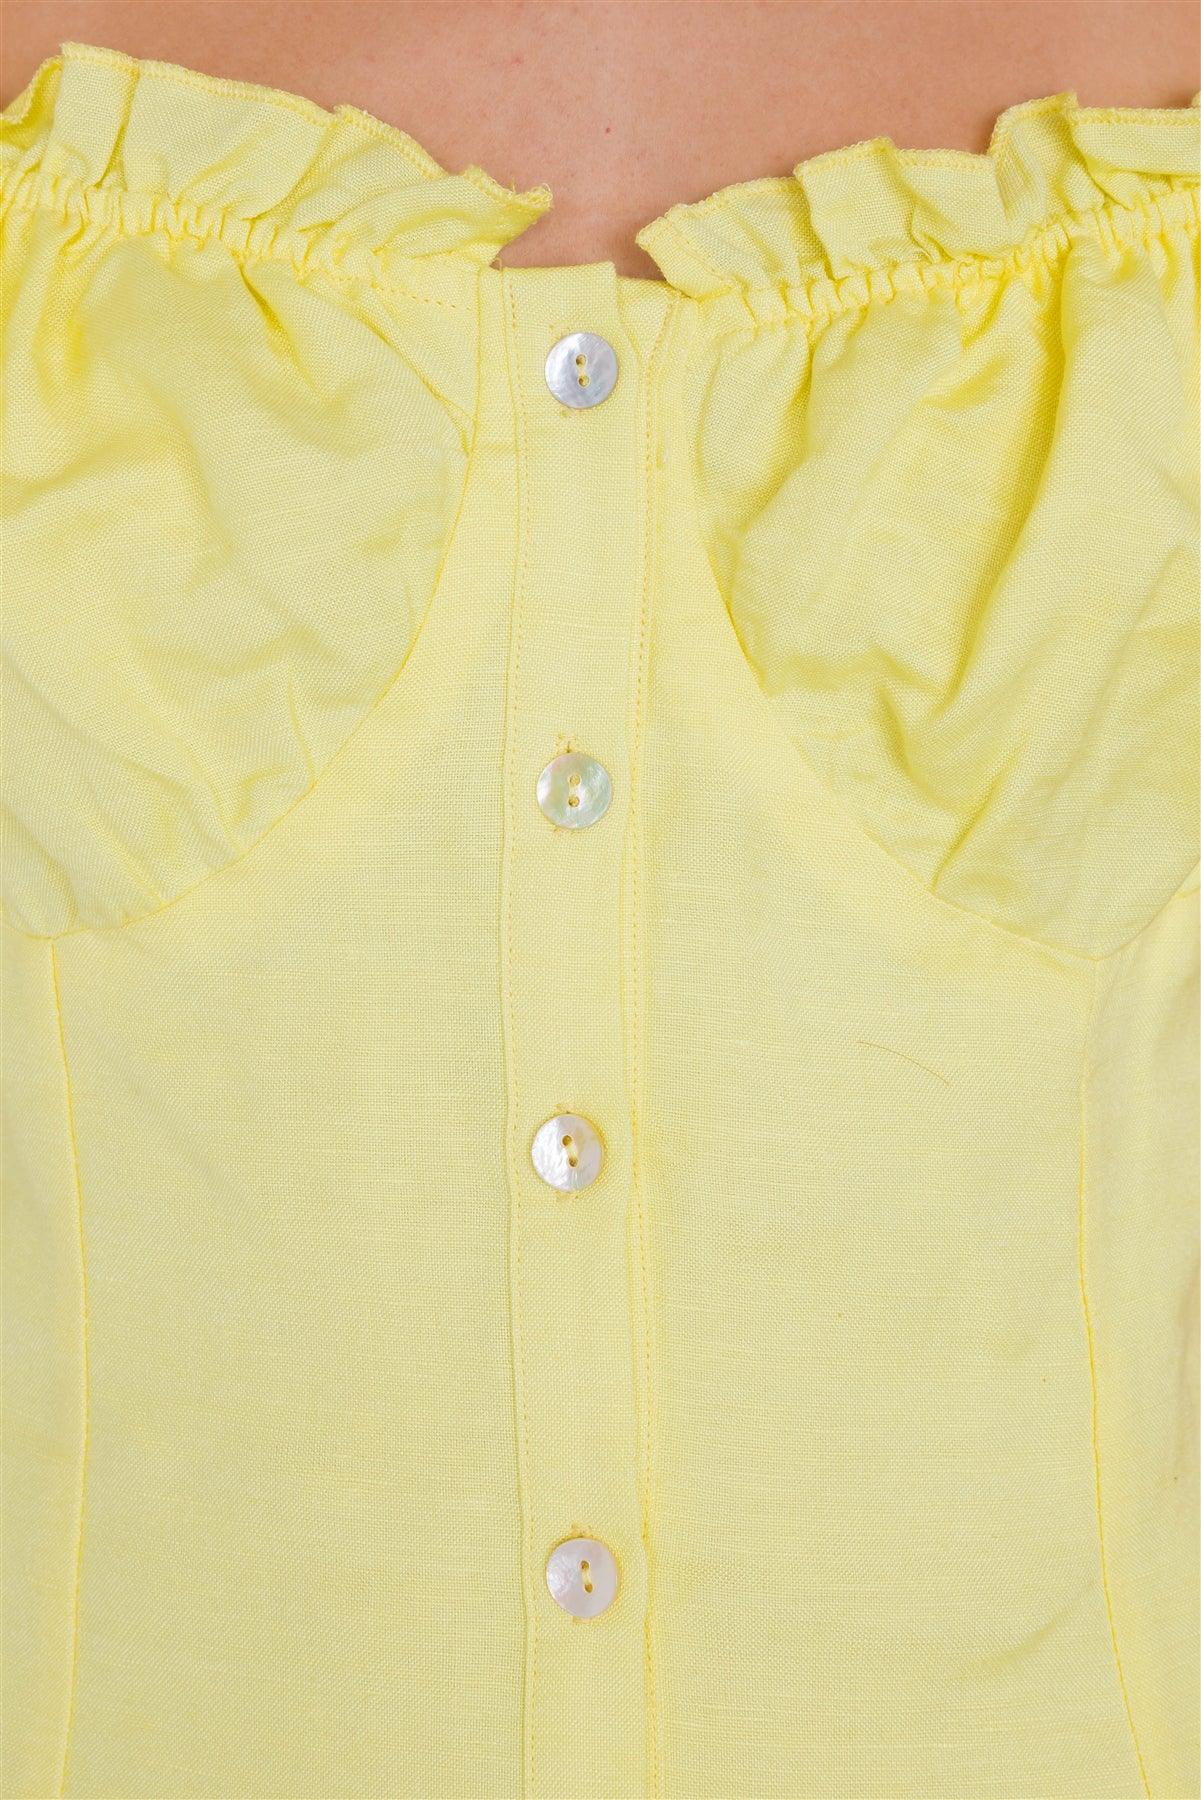 Vintage Yellow Linen Off-The-Shoulder Frill Trim Cap Sleeve Mini Dress /3-2-1